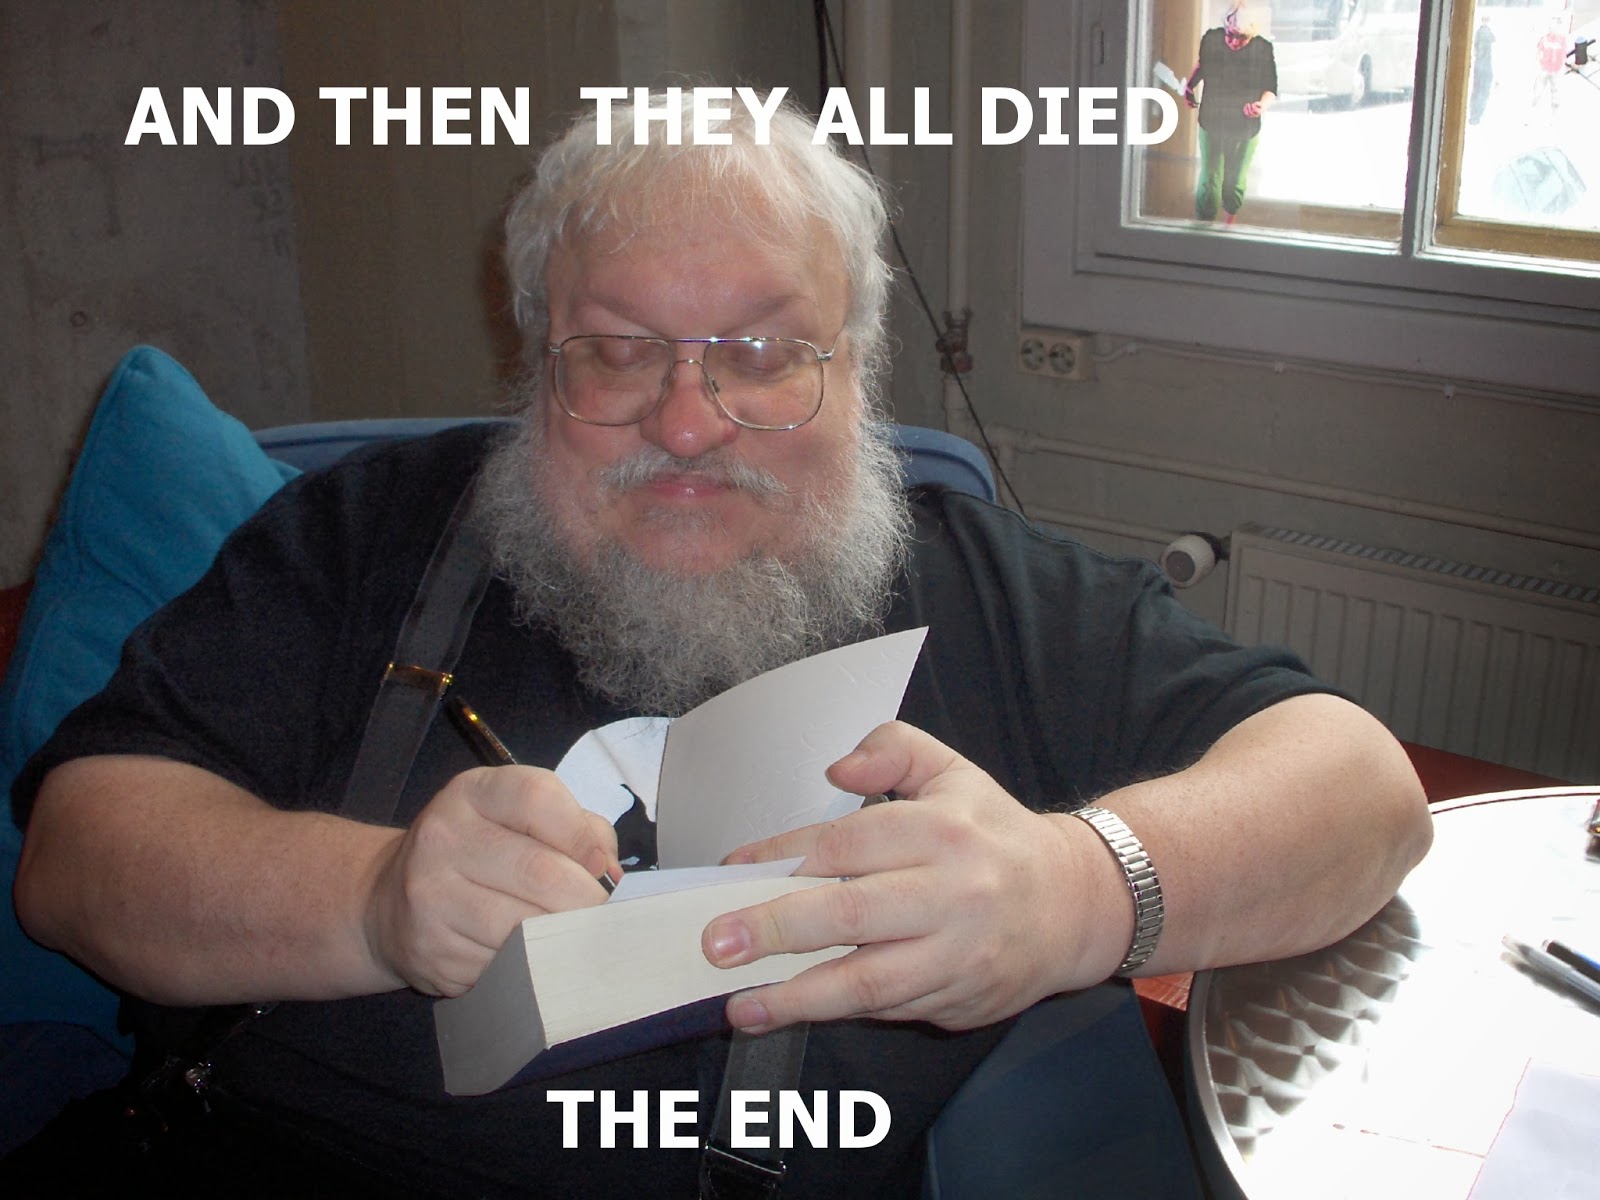 Game+of+Thrones+All+Died.jpg